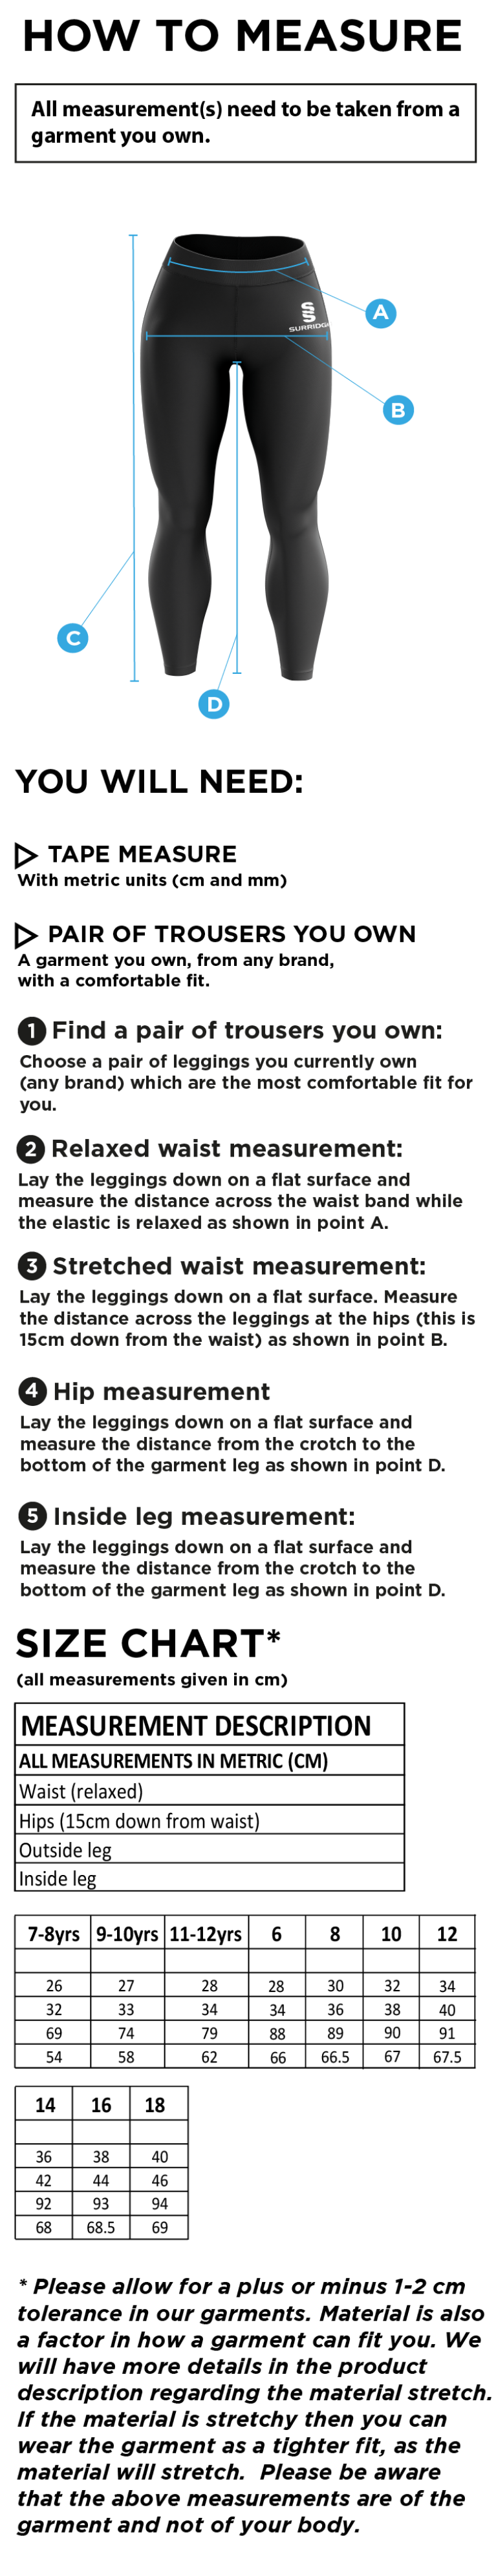 Warlingham Cricket Club Dual Leggings - Size Guide